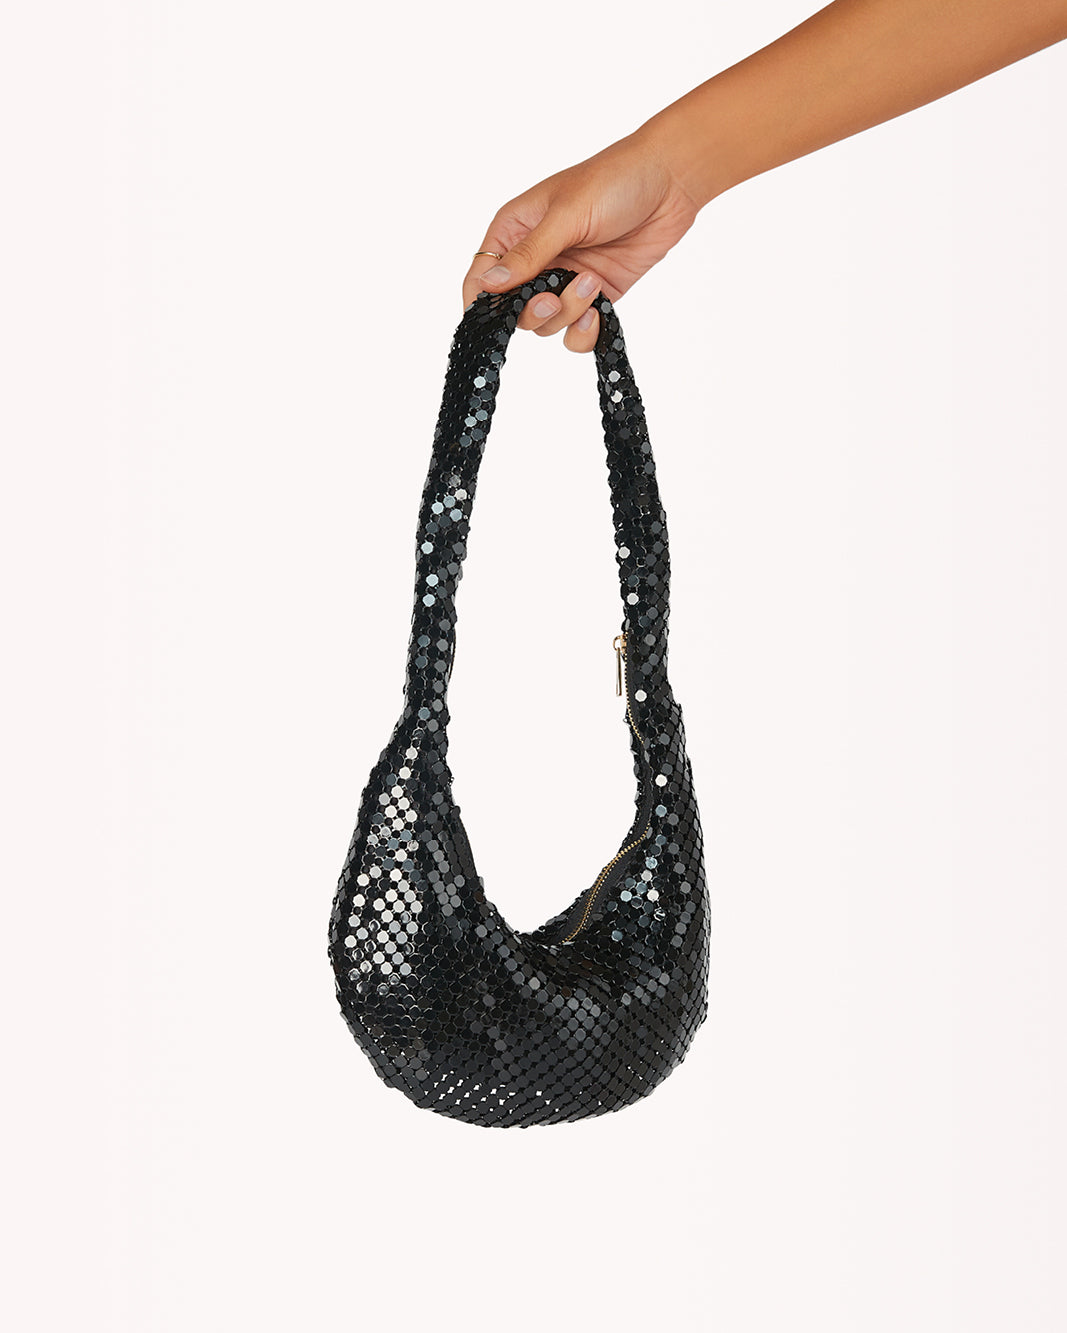 LUNA SHOULDER BAG - BLACK GLOWMESH-Handbags-Billini-O/S-BILLINI USA